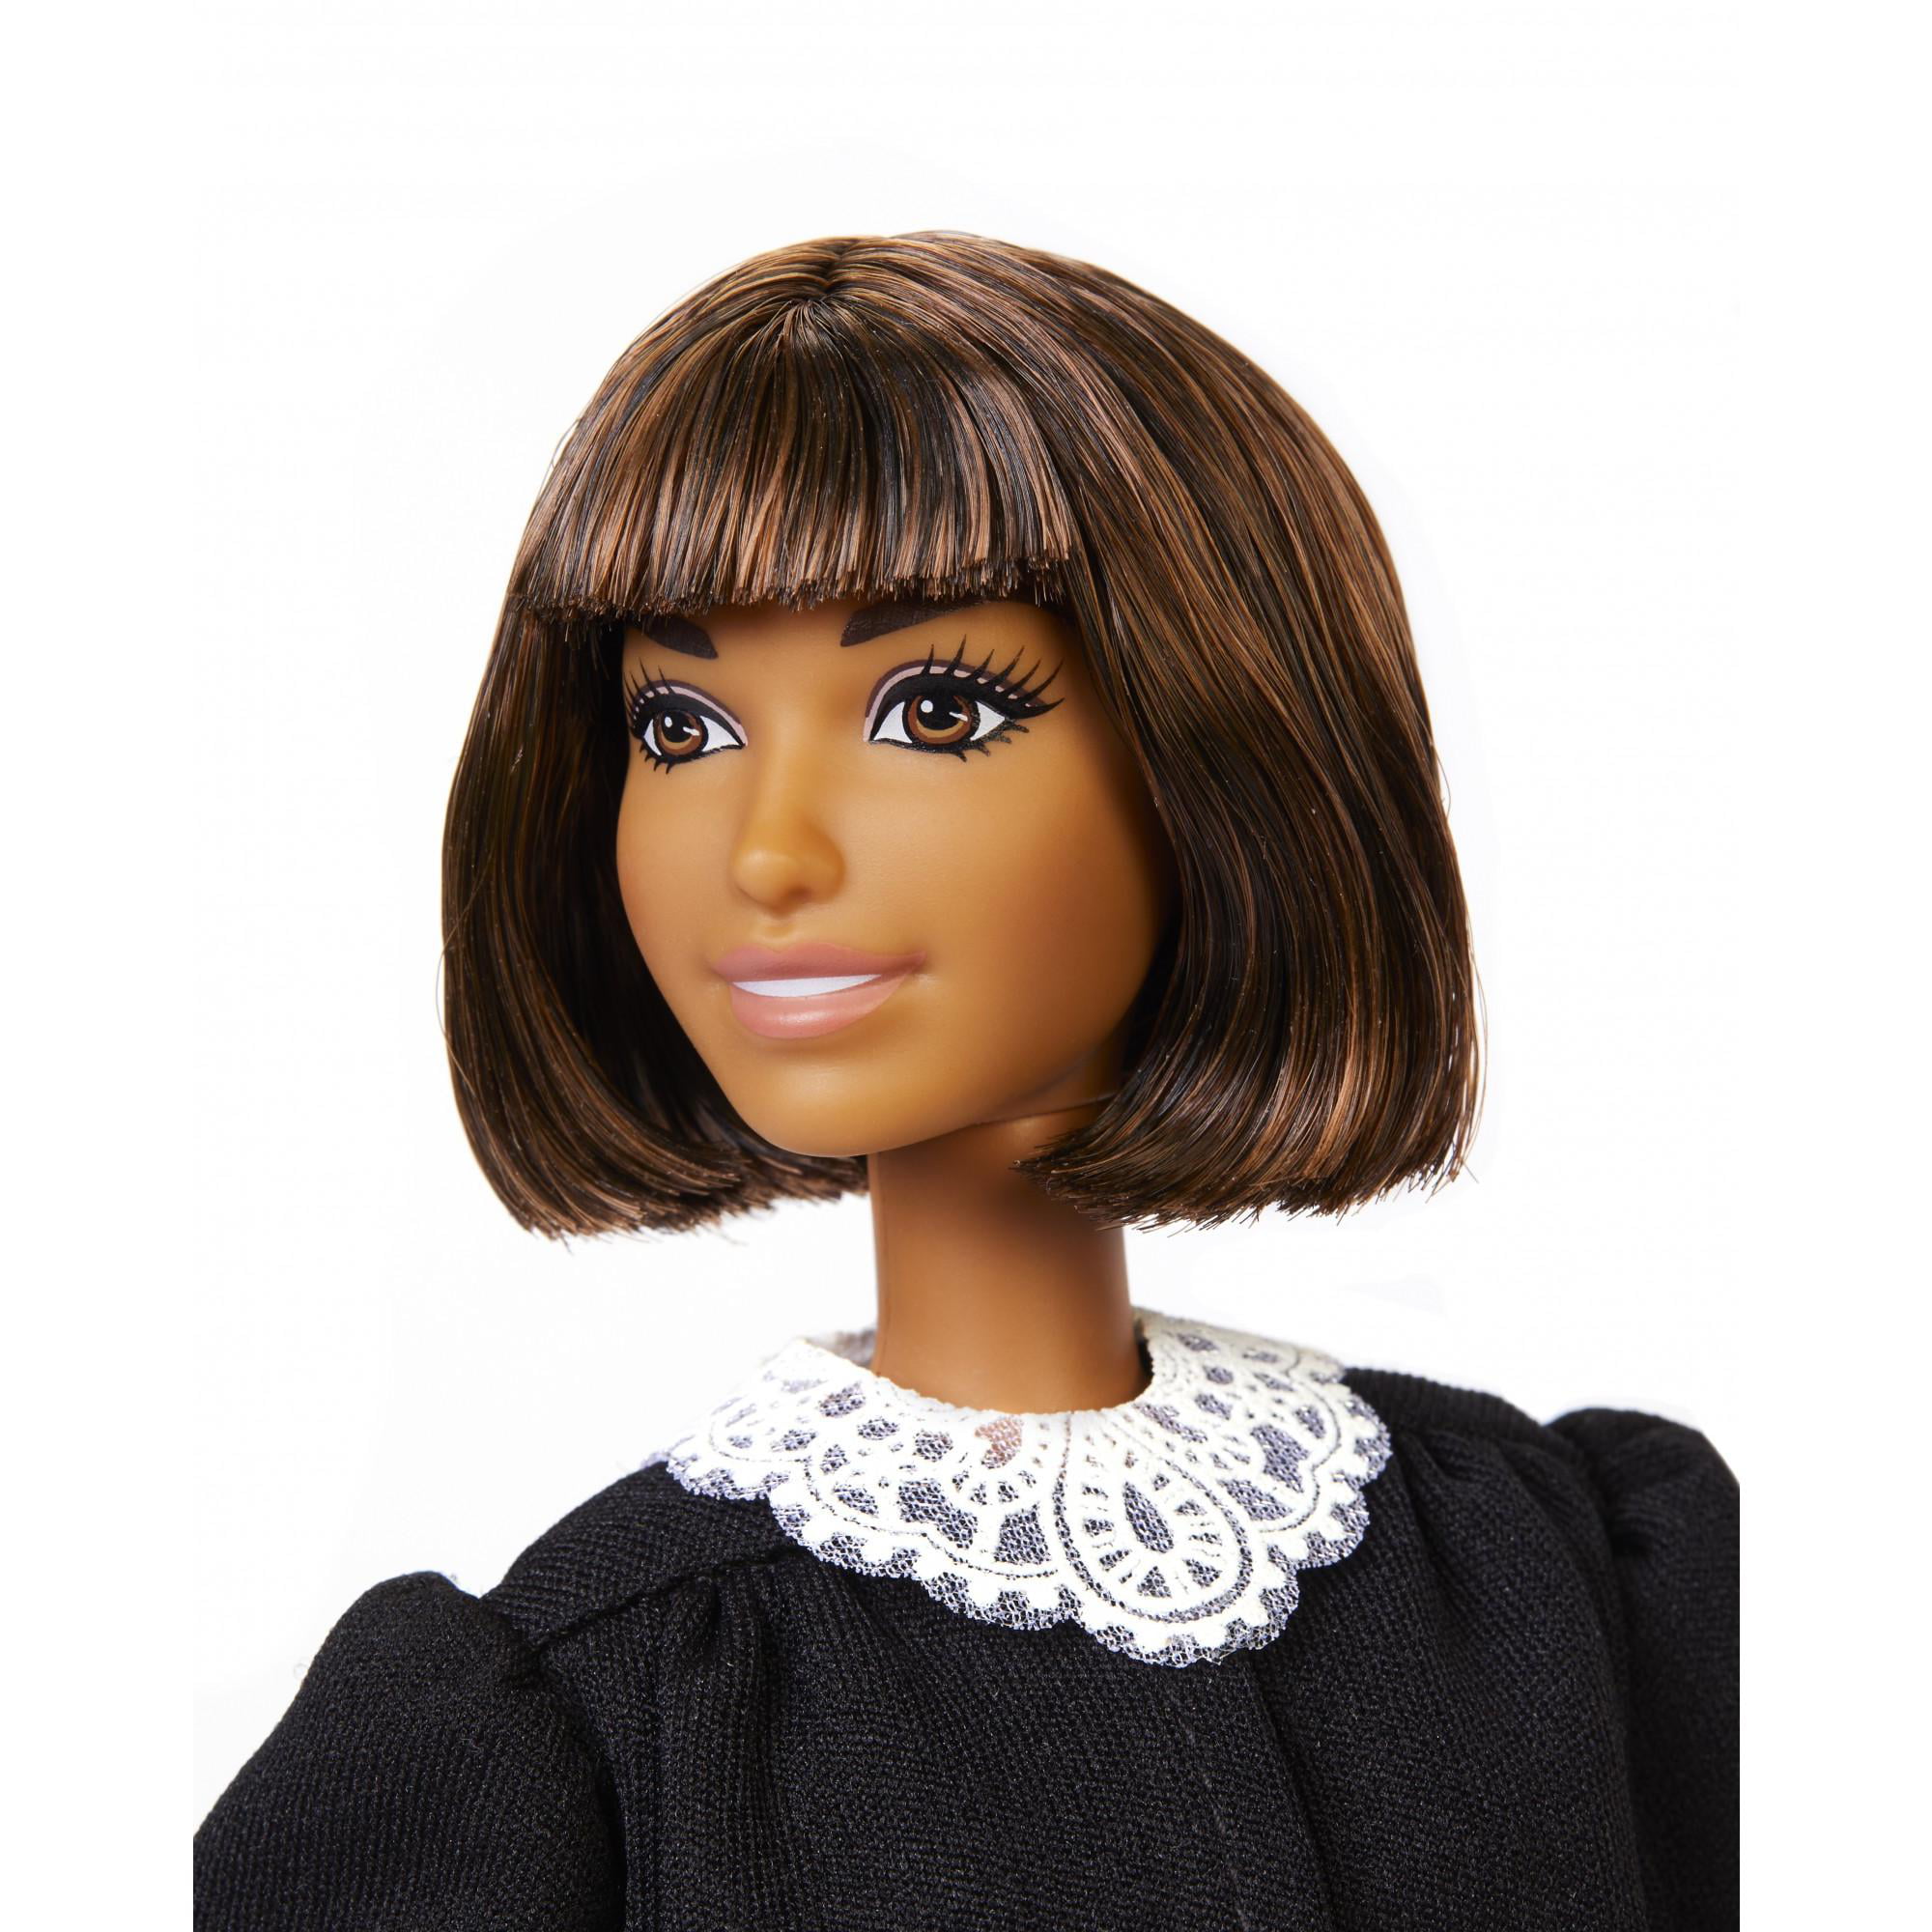 Barbie Career of the Year Judge Doll, Short Brown Hair - Walmart.com